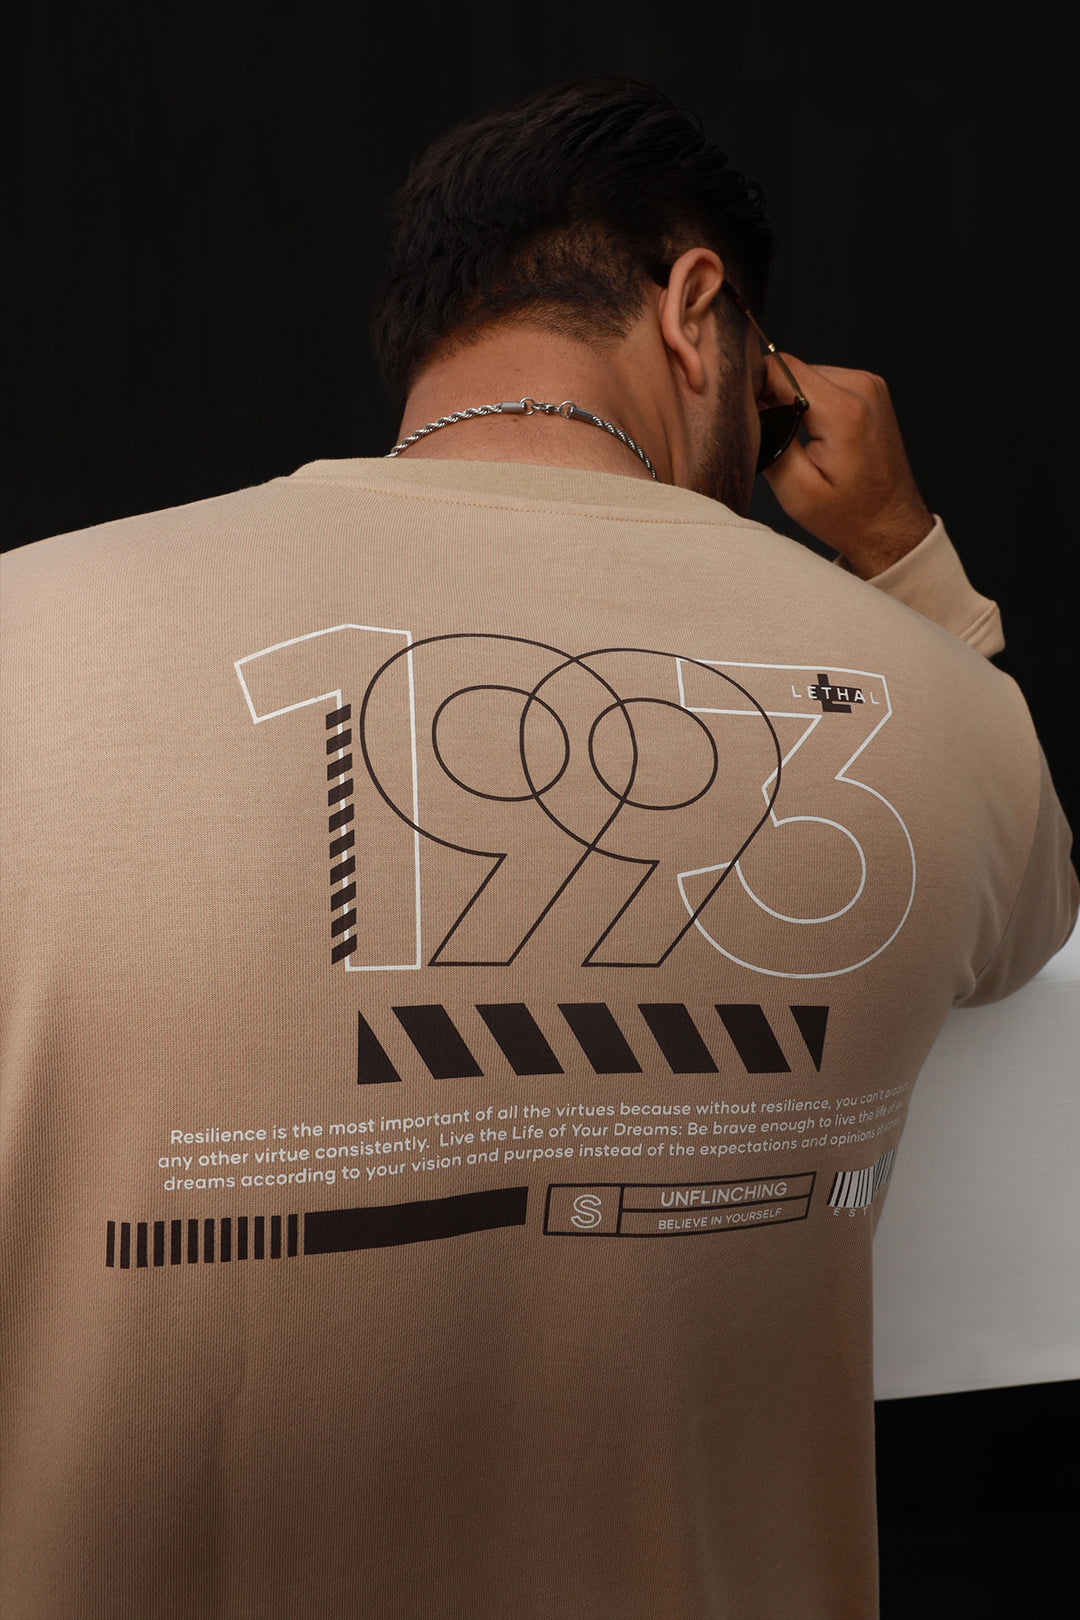 Taupe 1993 Back Printed Sweatshirt Plus Size Online in Pakistan